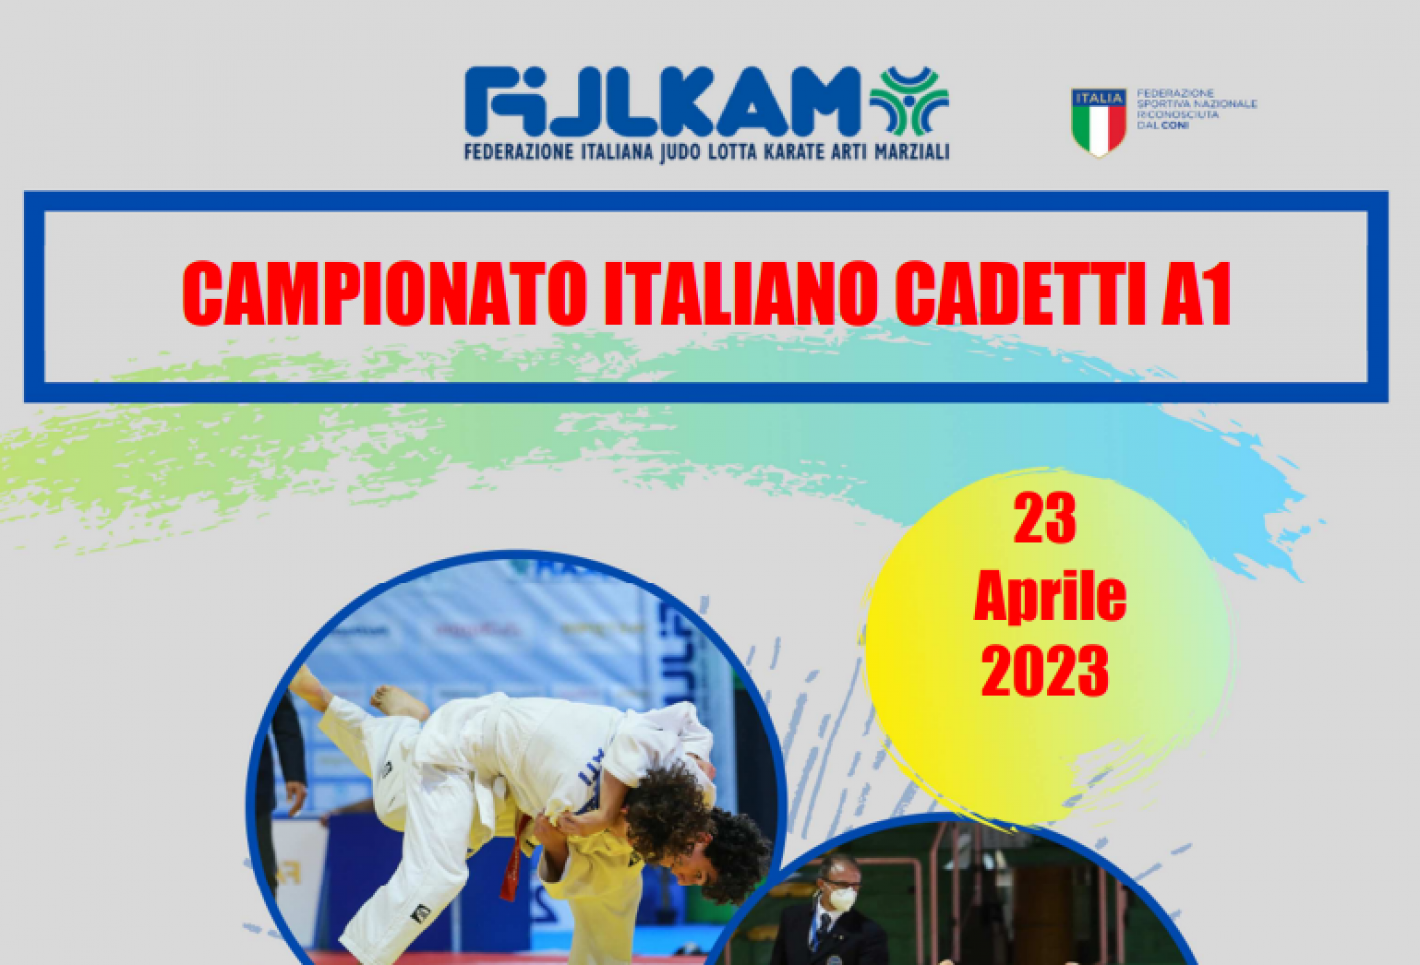 images/sardegna/Settore_Judo/2023/20230423_Campionati_Italiani_Cadetti_A1/medium/Immagine.png